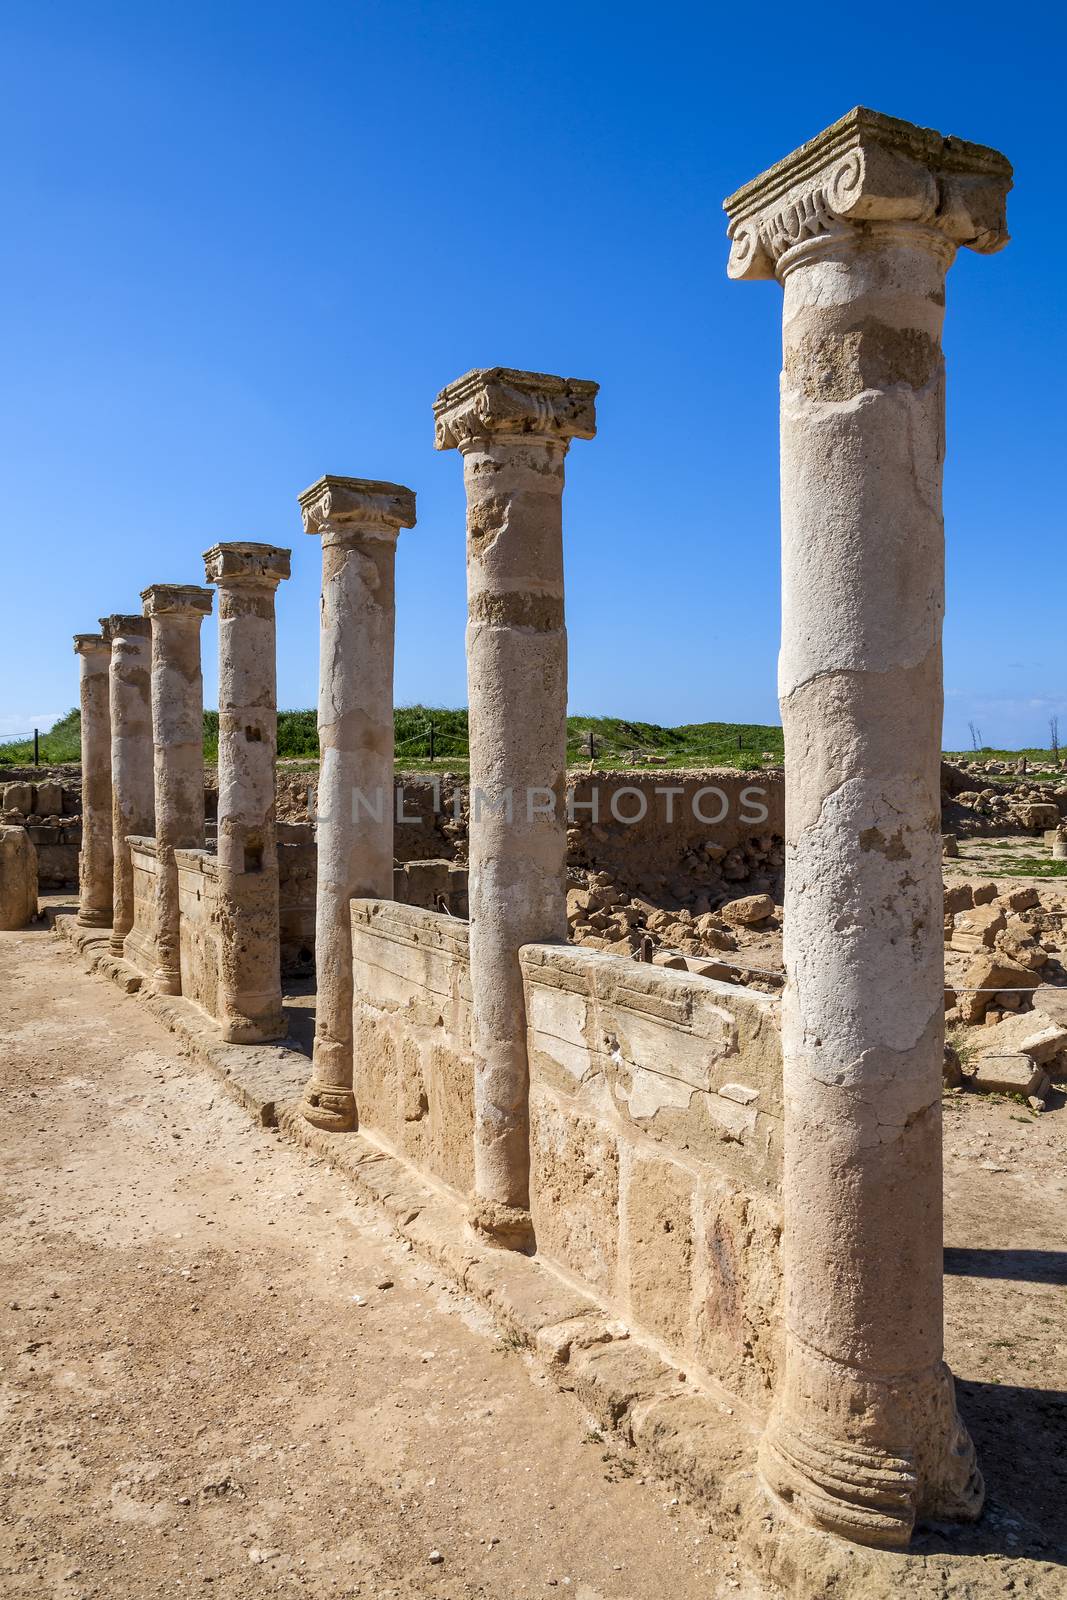 Travel Destination showing  an Ancient Roman Columns building ruin at Paphos Cyprus